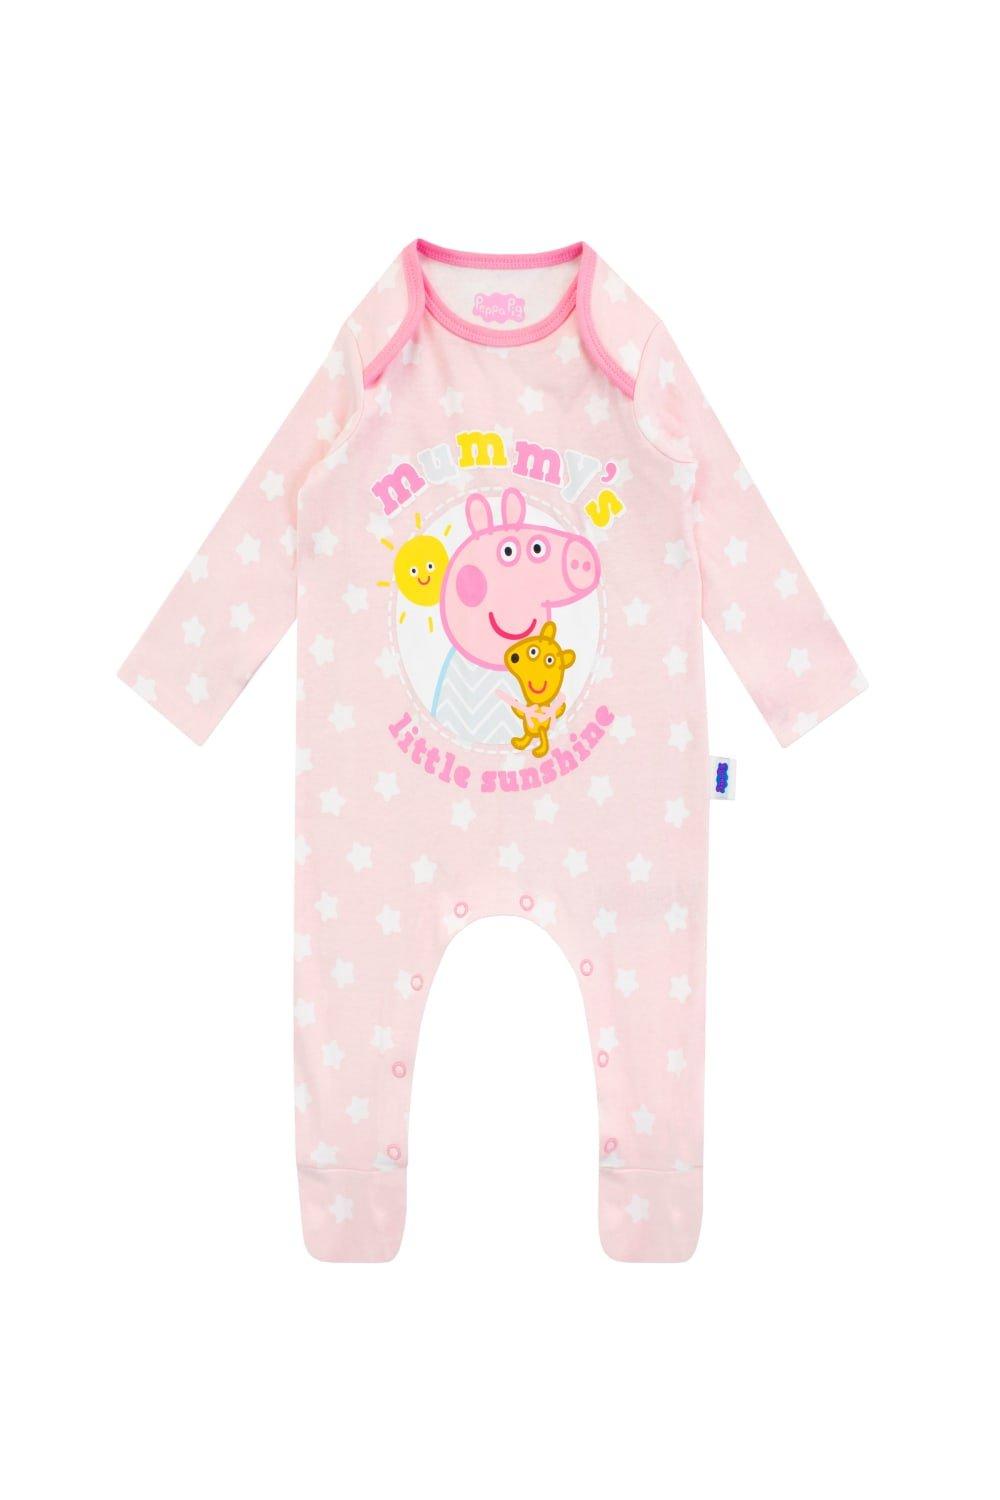 Peppa Pig Mummy's Little Sunshine Baby Sleepsuit